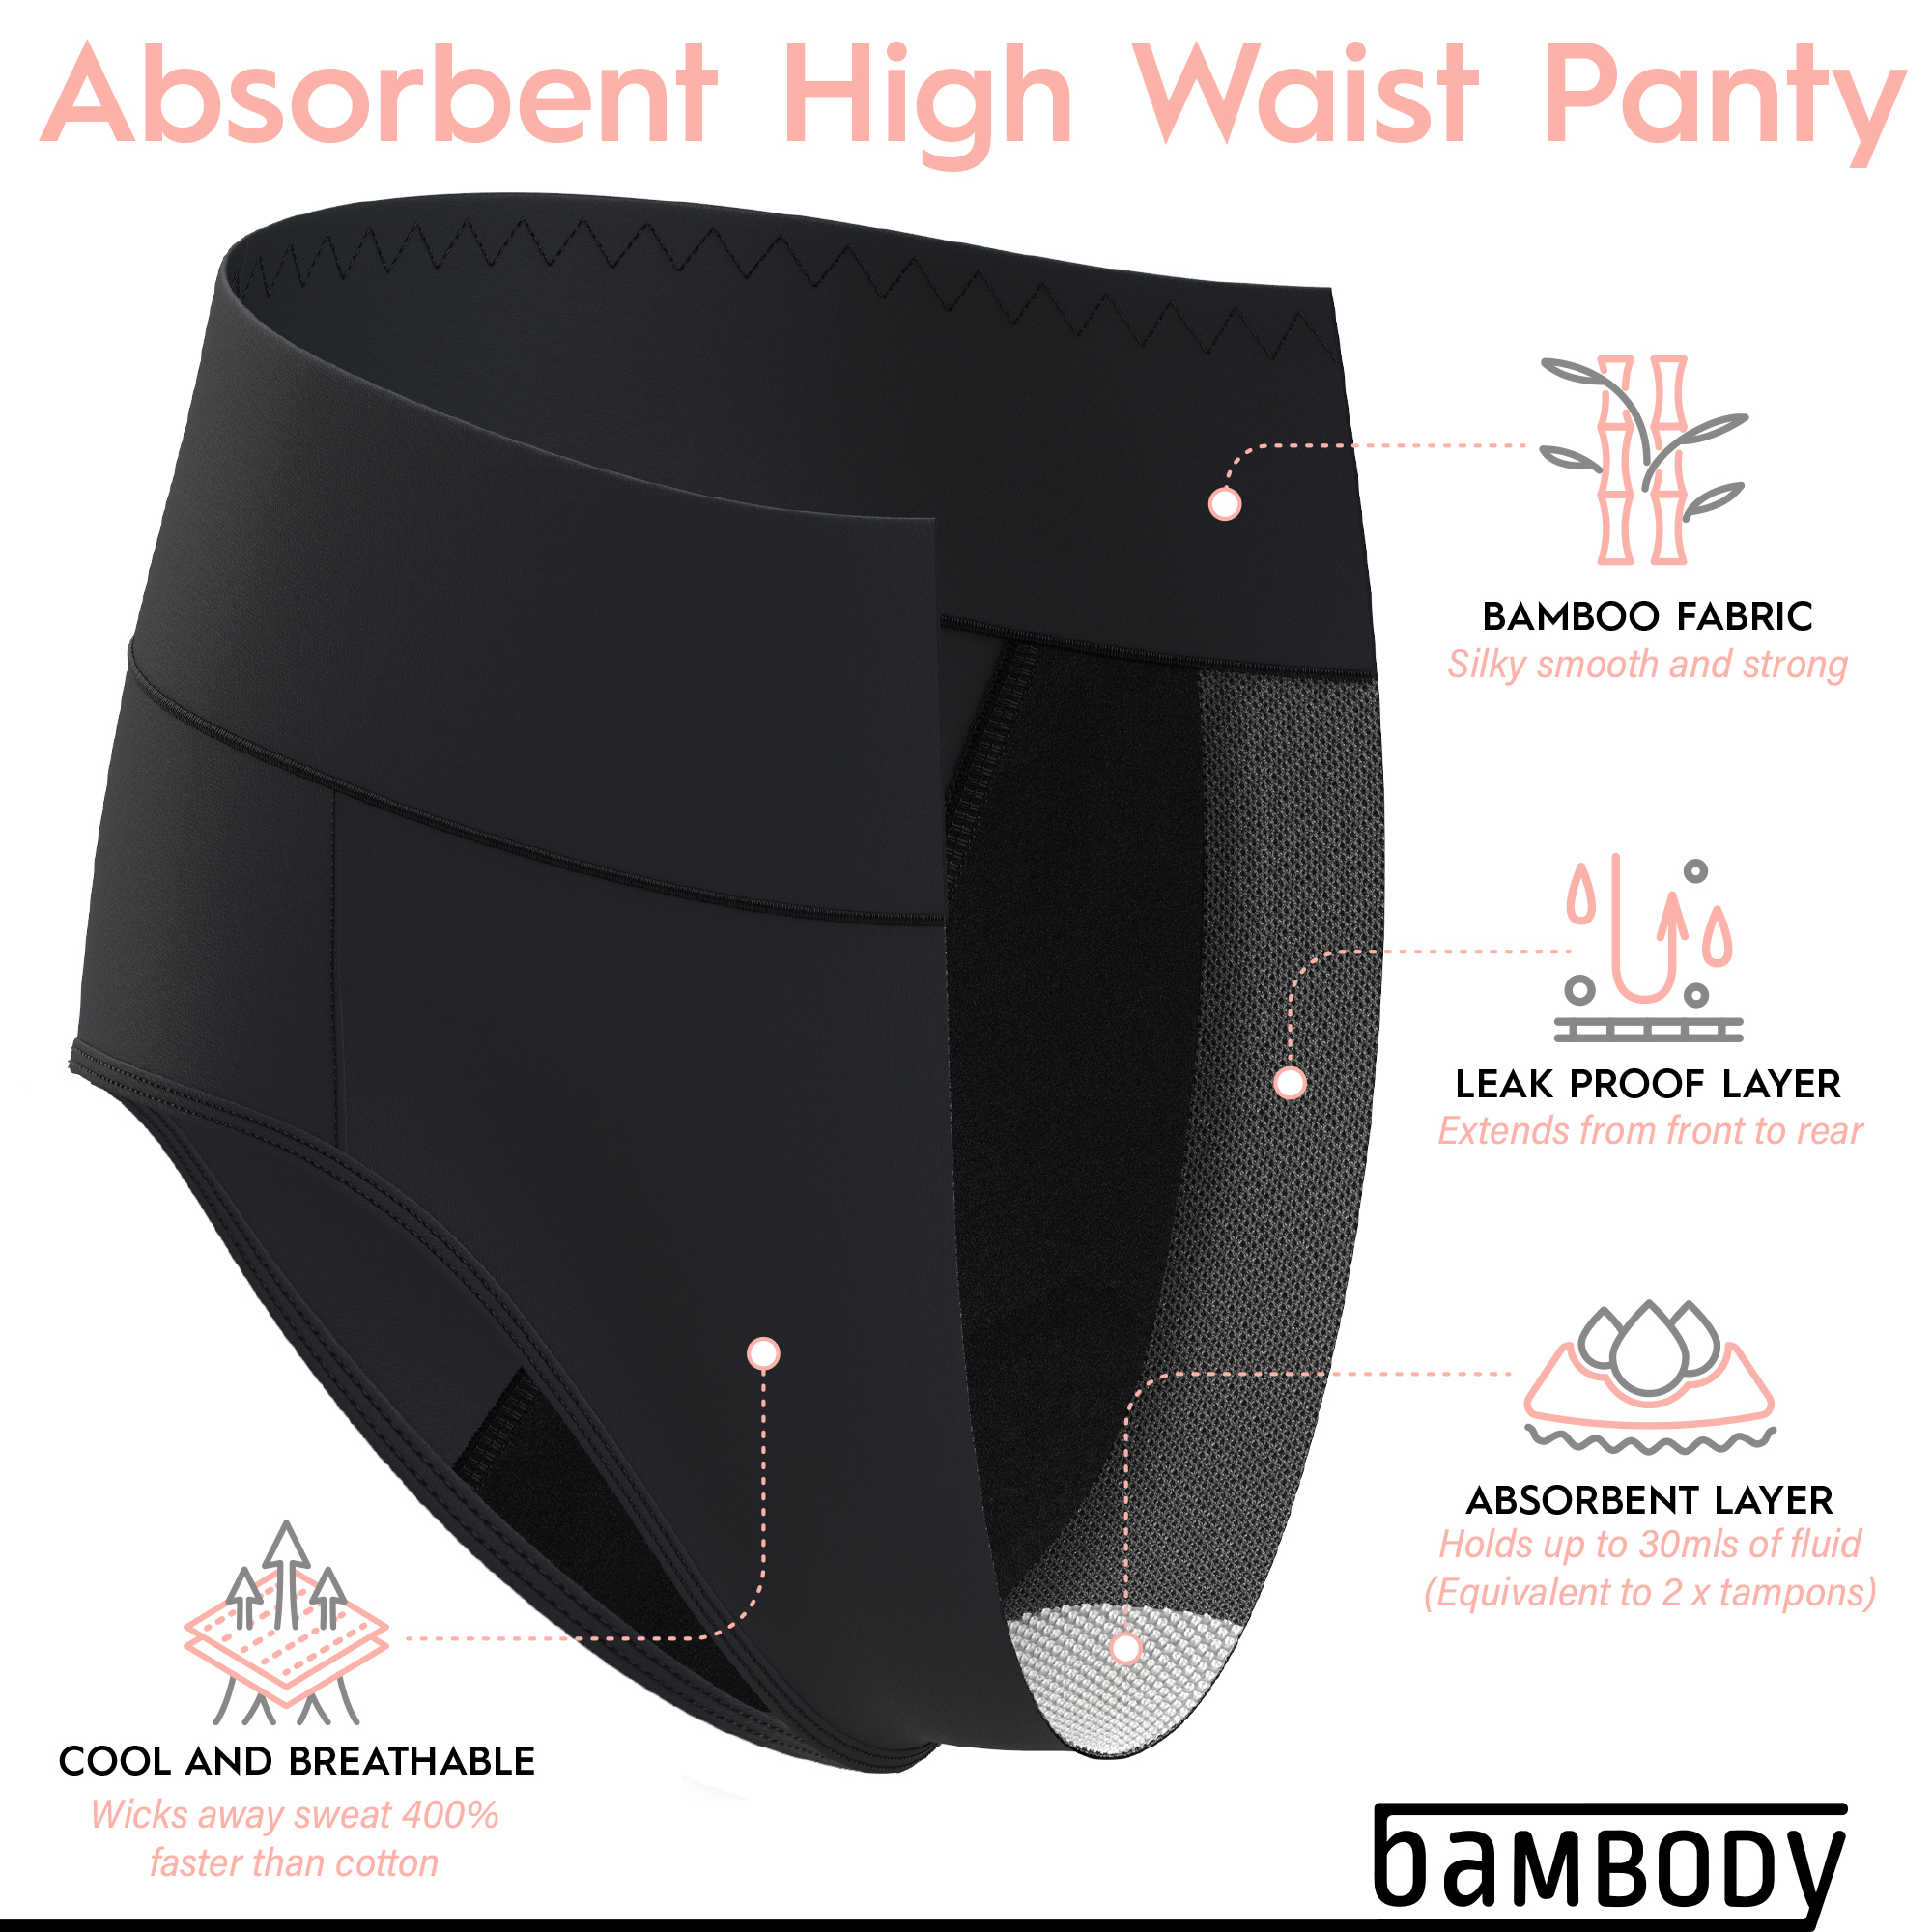 Bambody Absorbent High Waist: Period Underwear for India